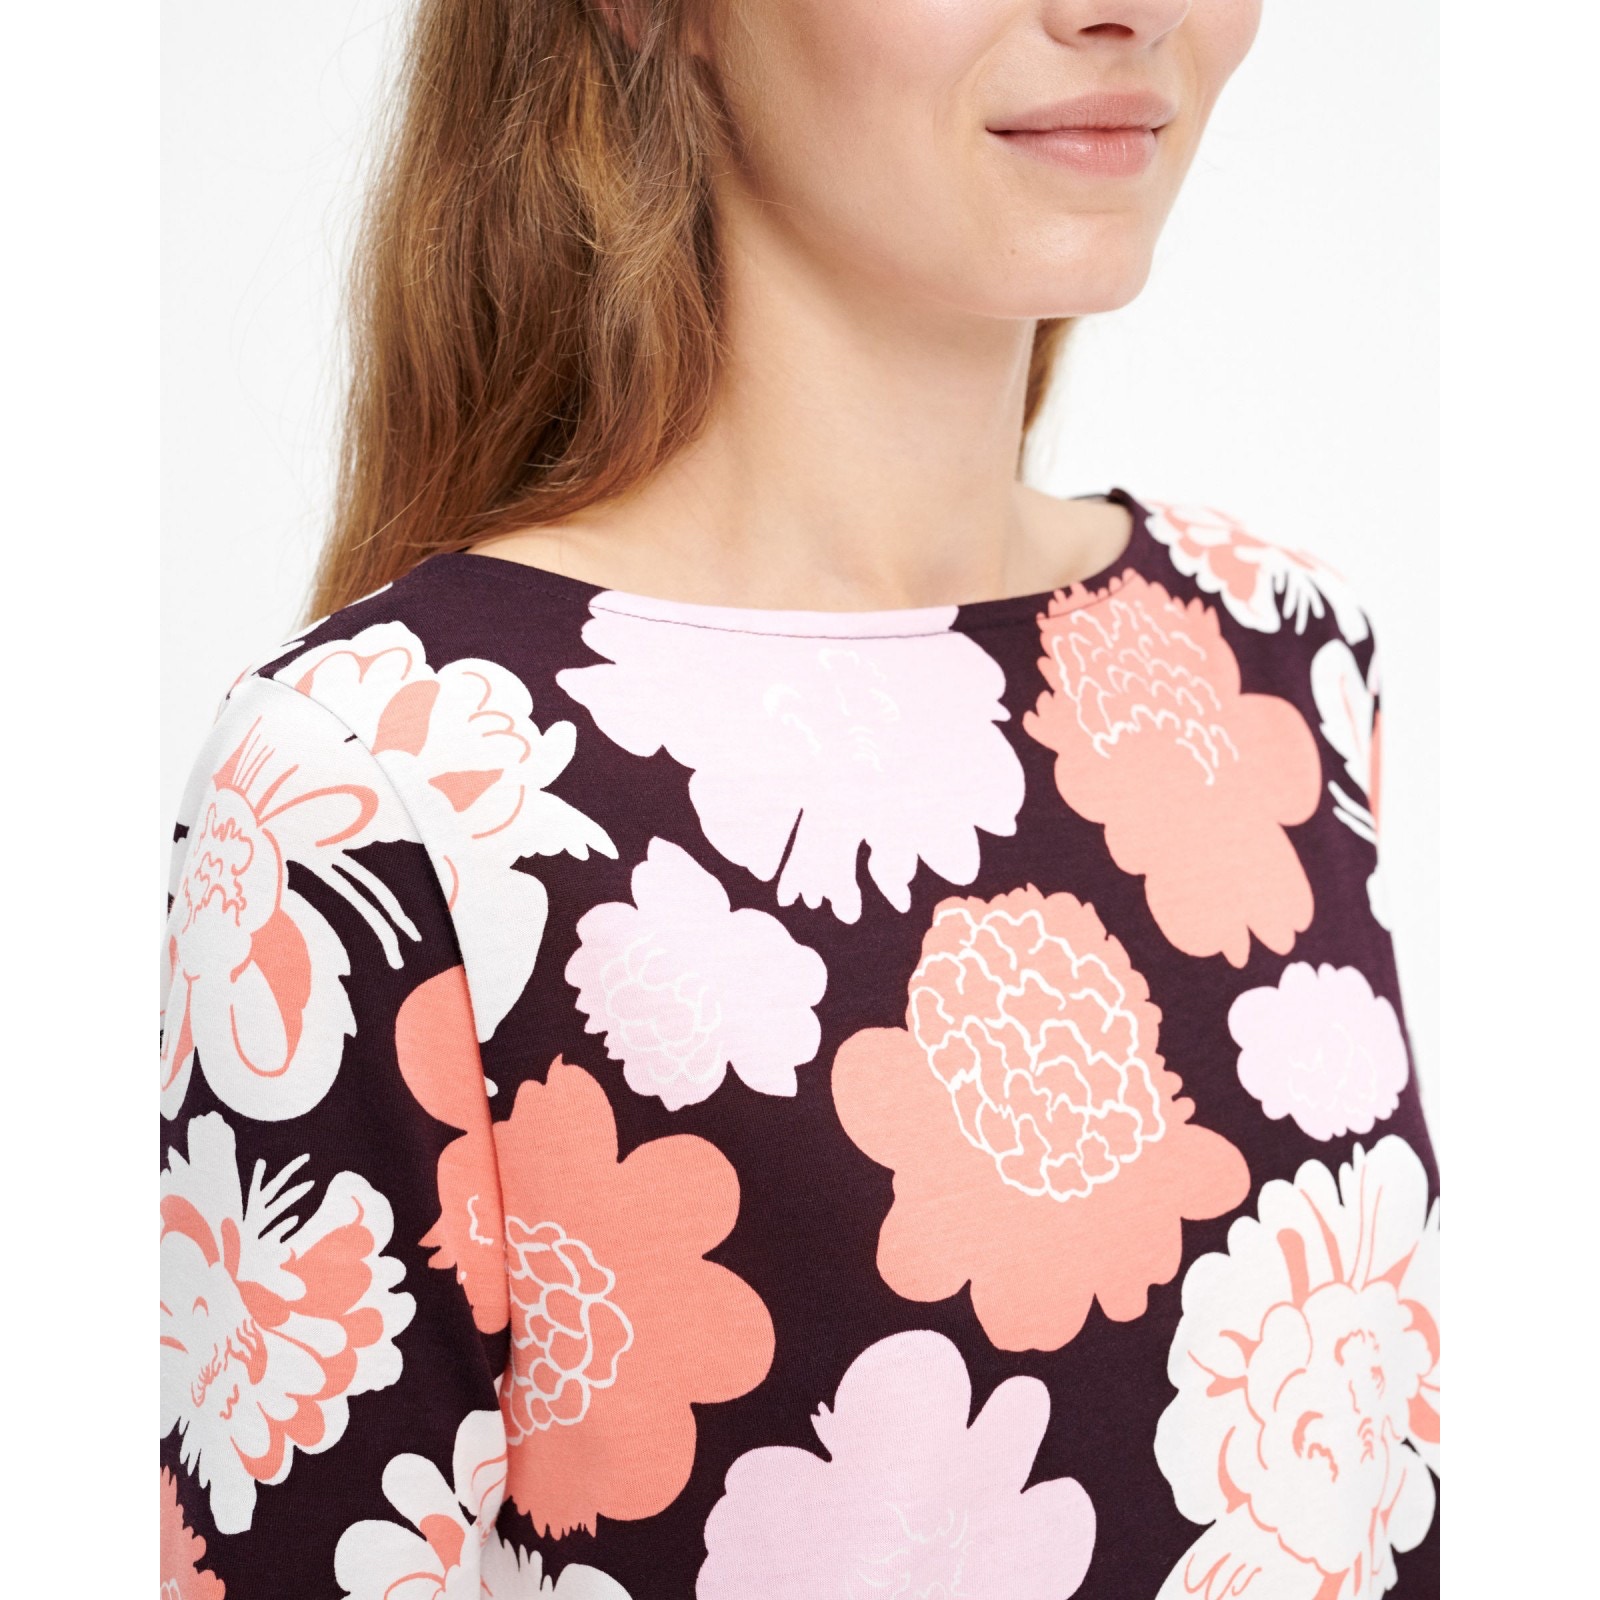 Pioni Marimekko Clothing Collection – Spring / Summer 2020